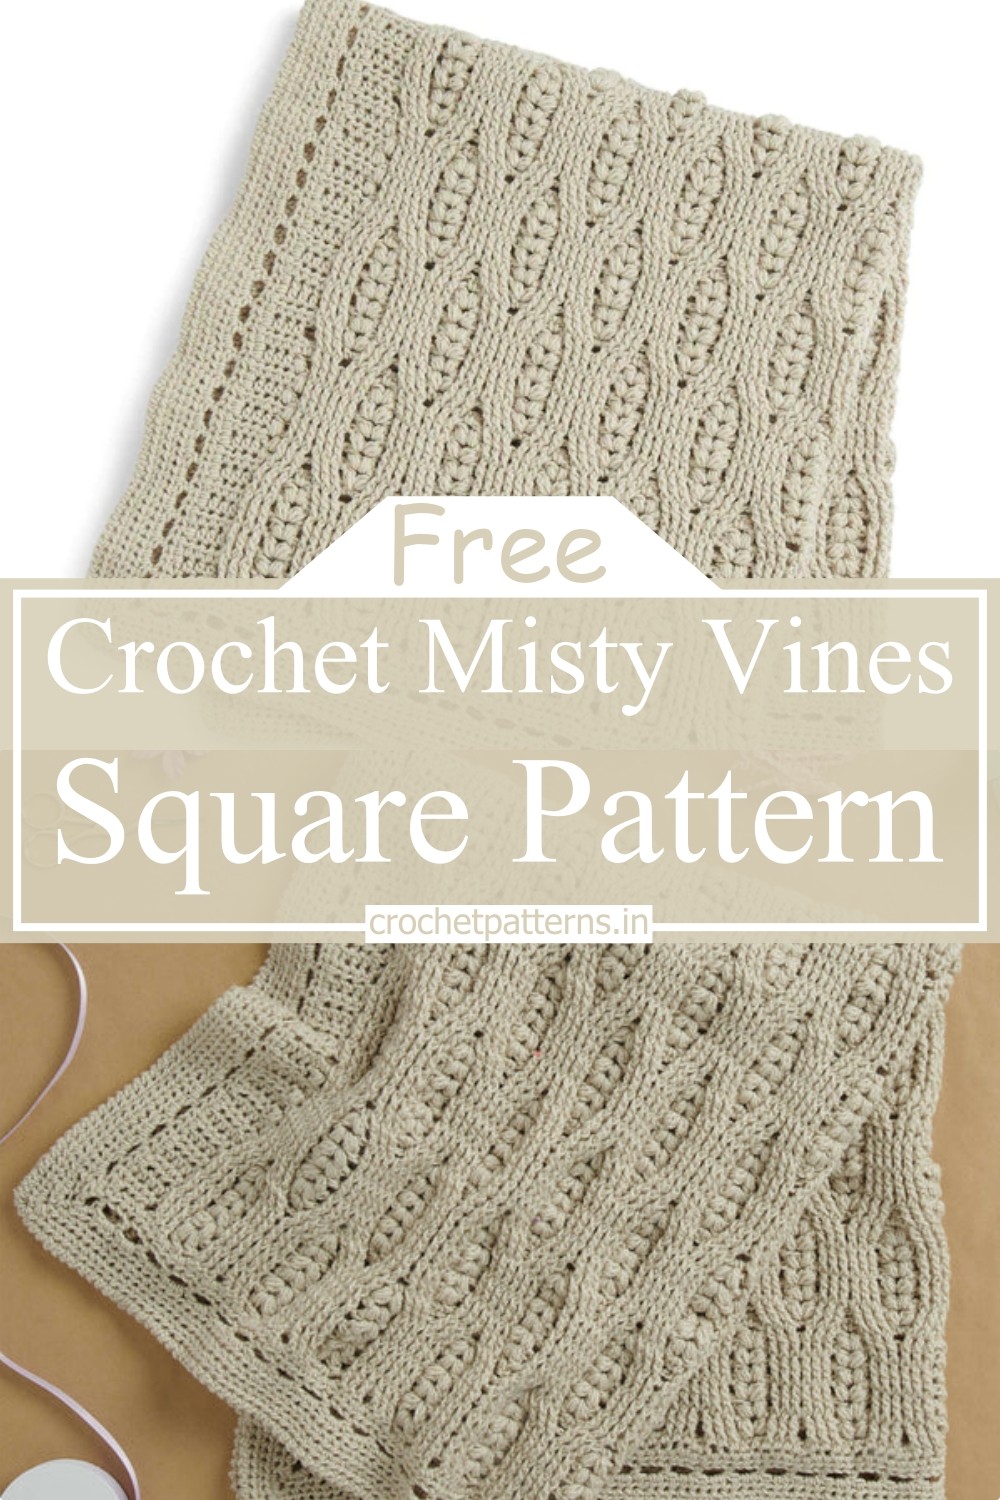 Crochet Misty Vines Square Pattern